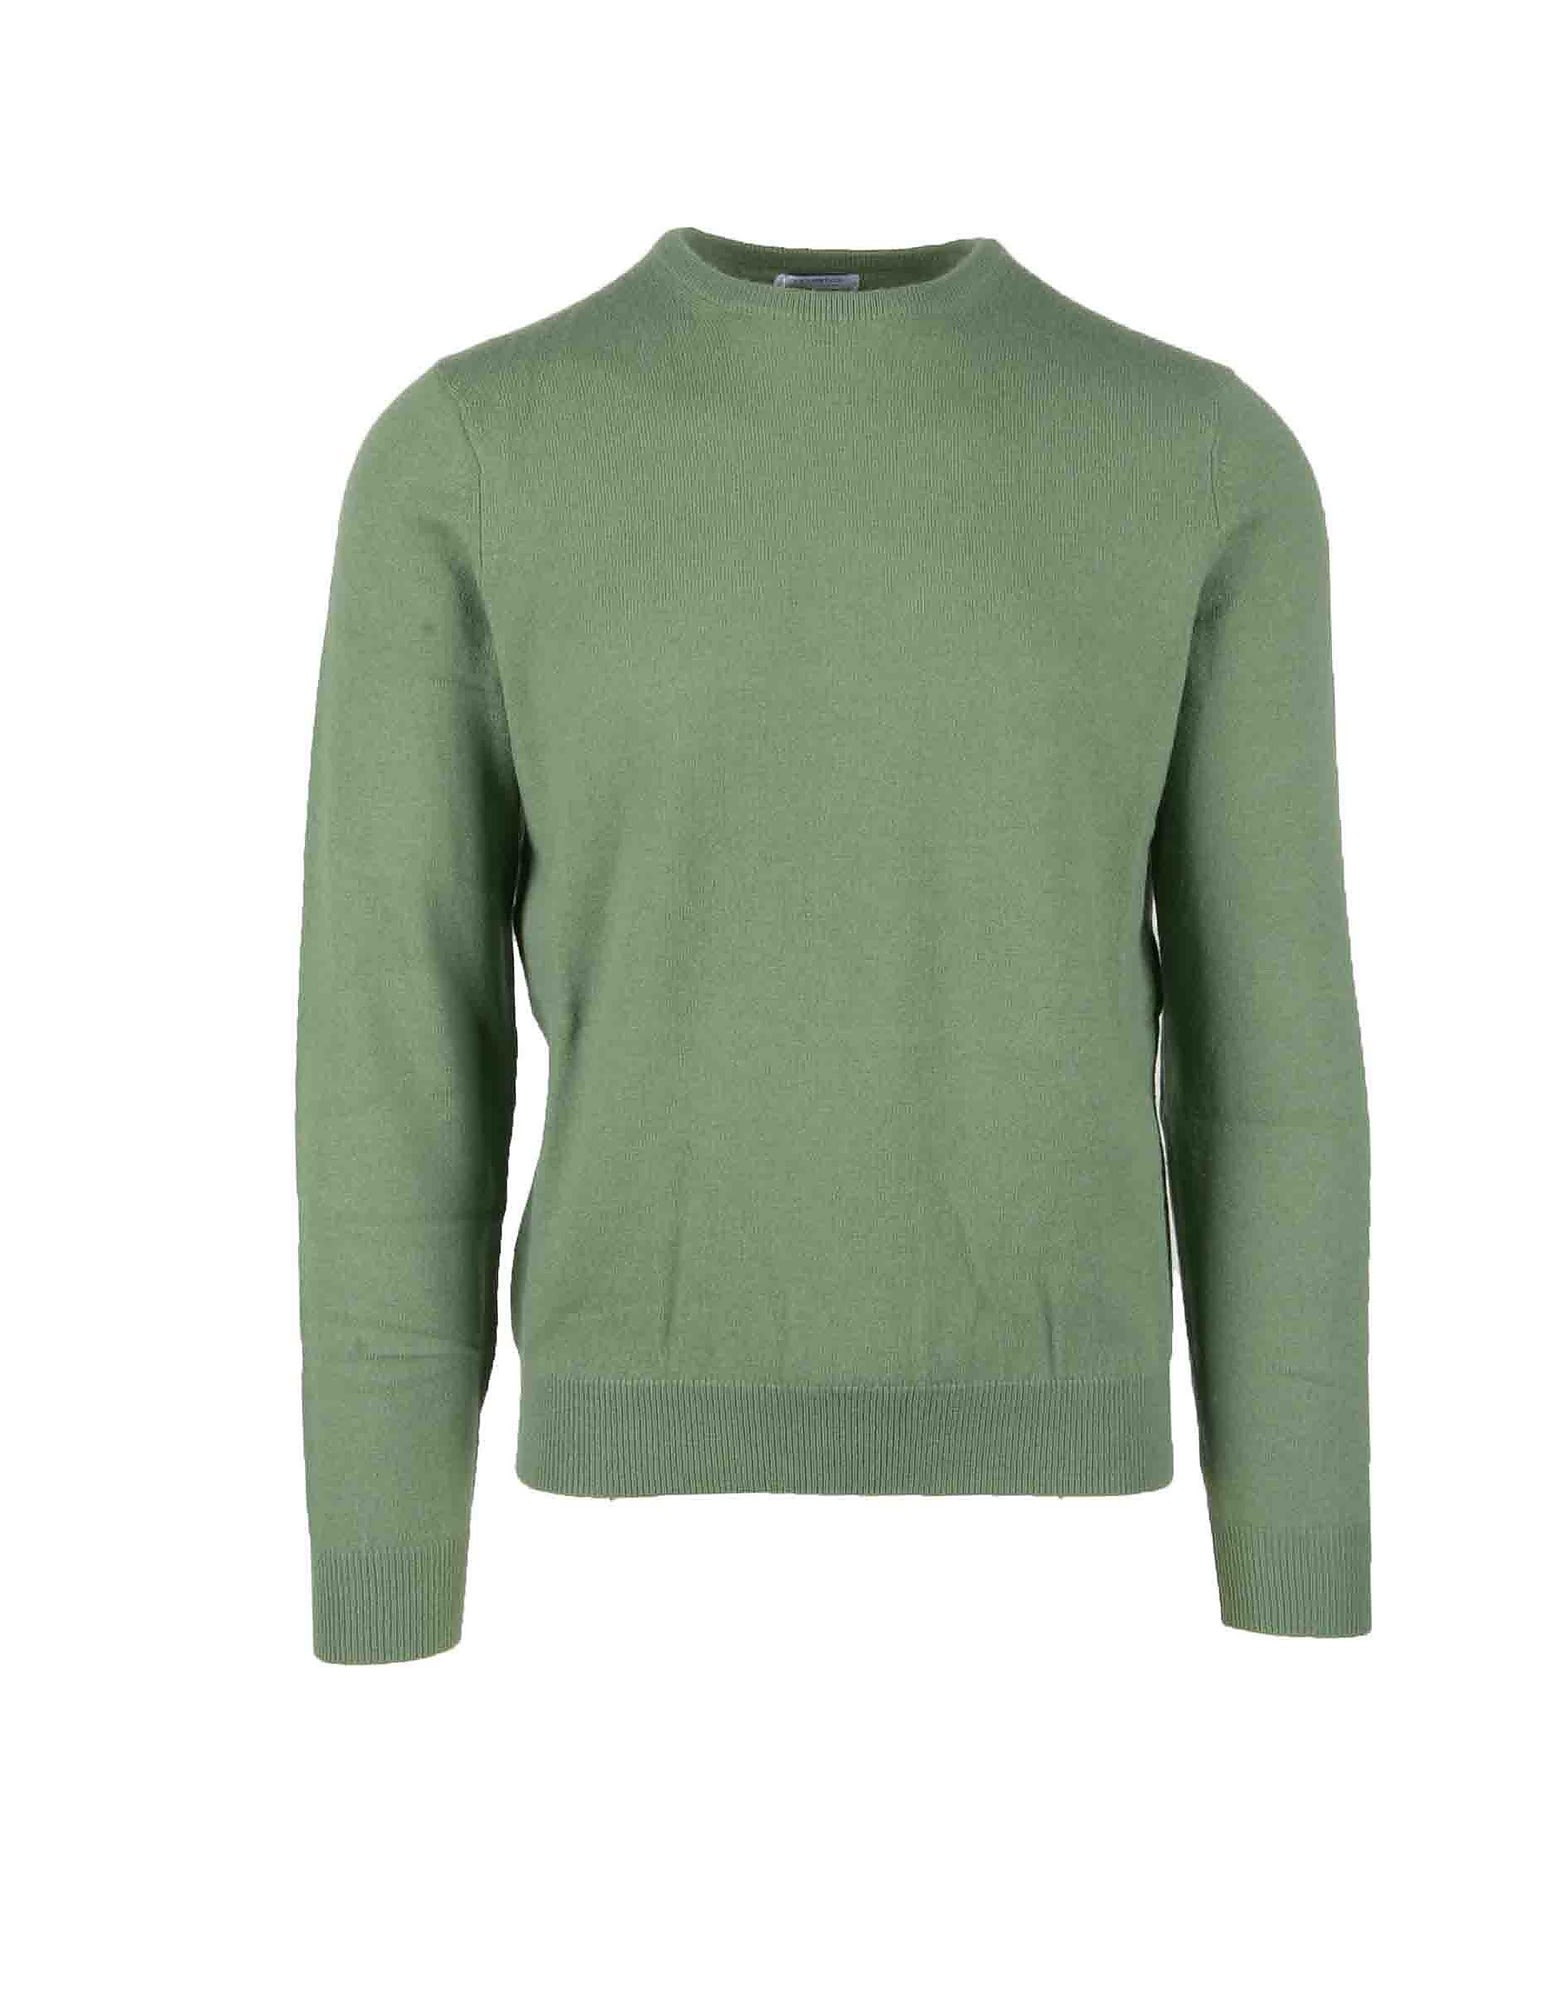 Mens Green Sweater